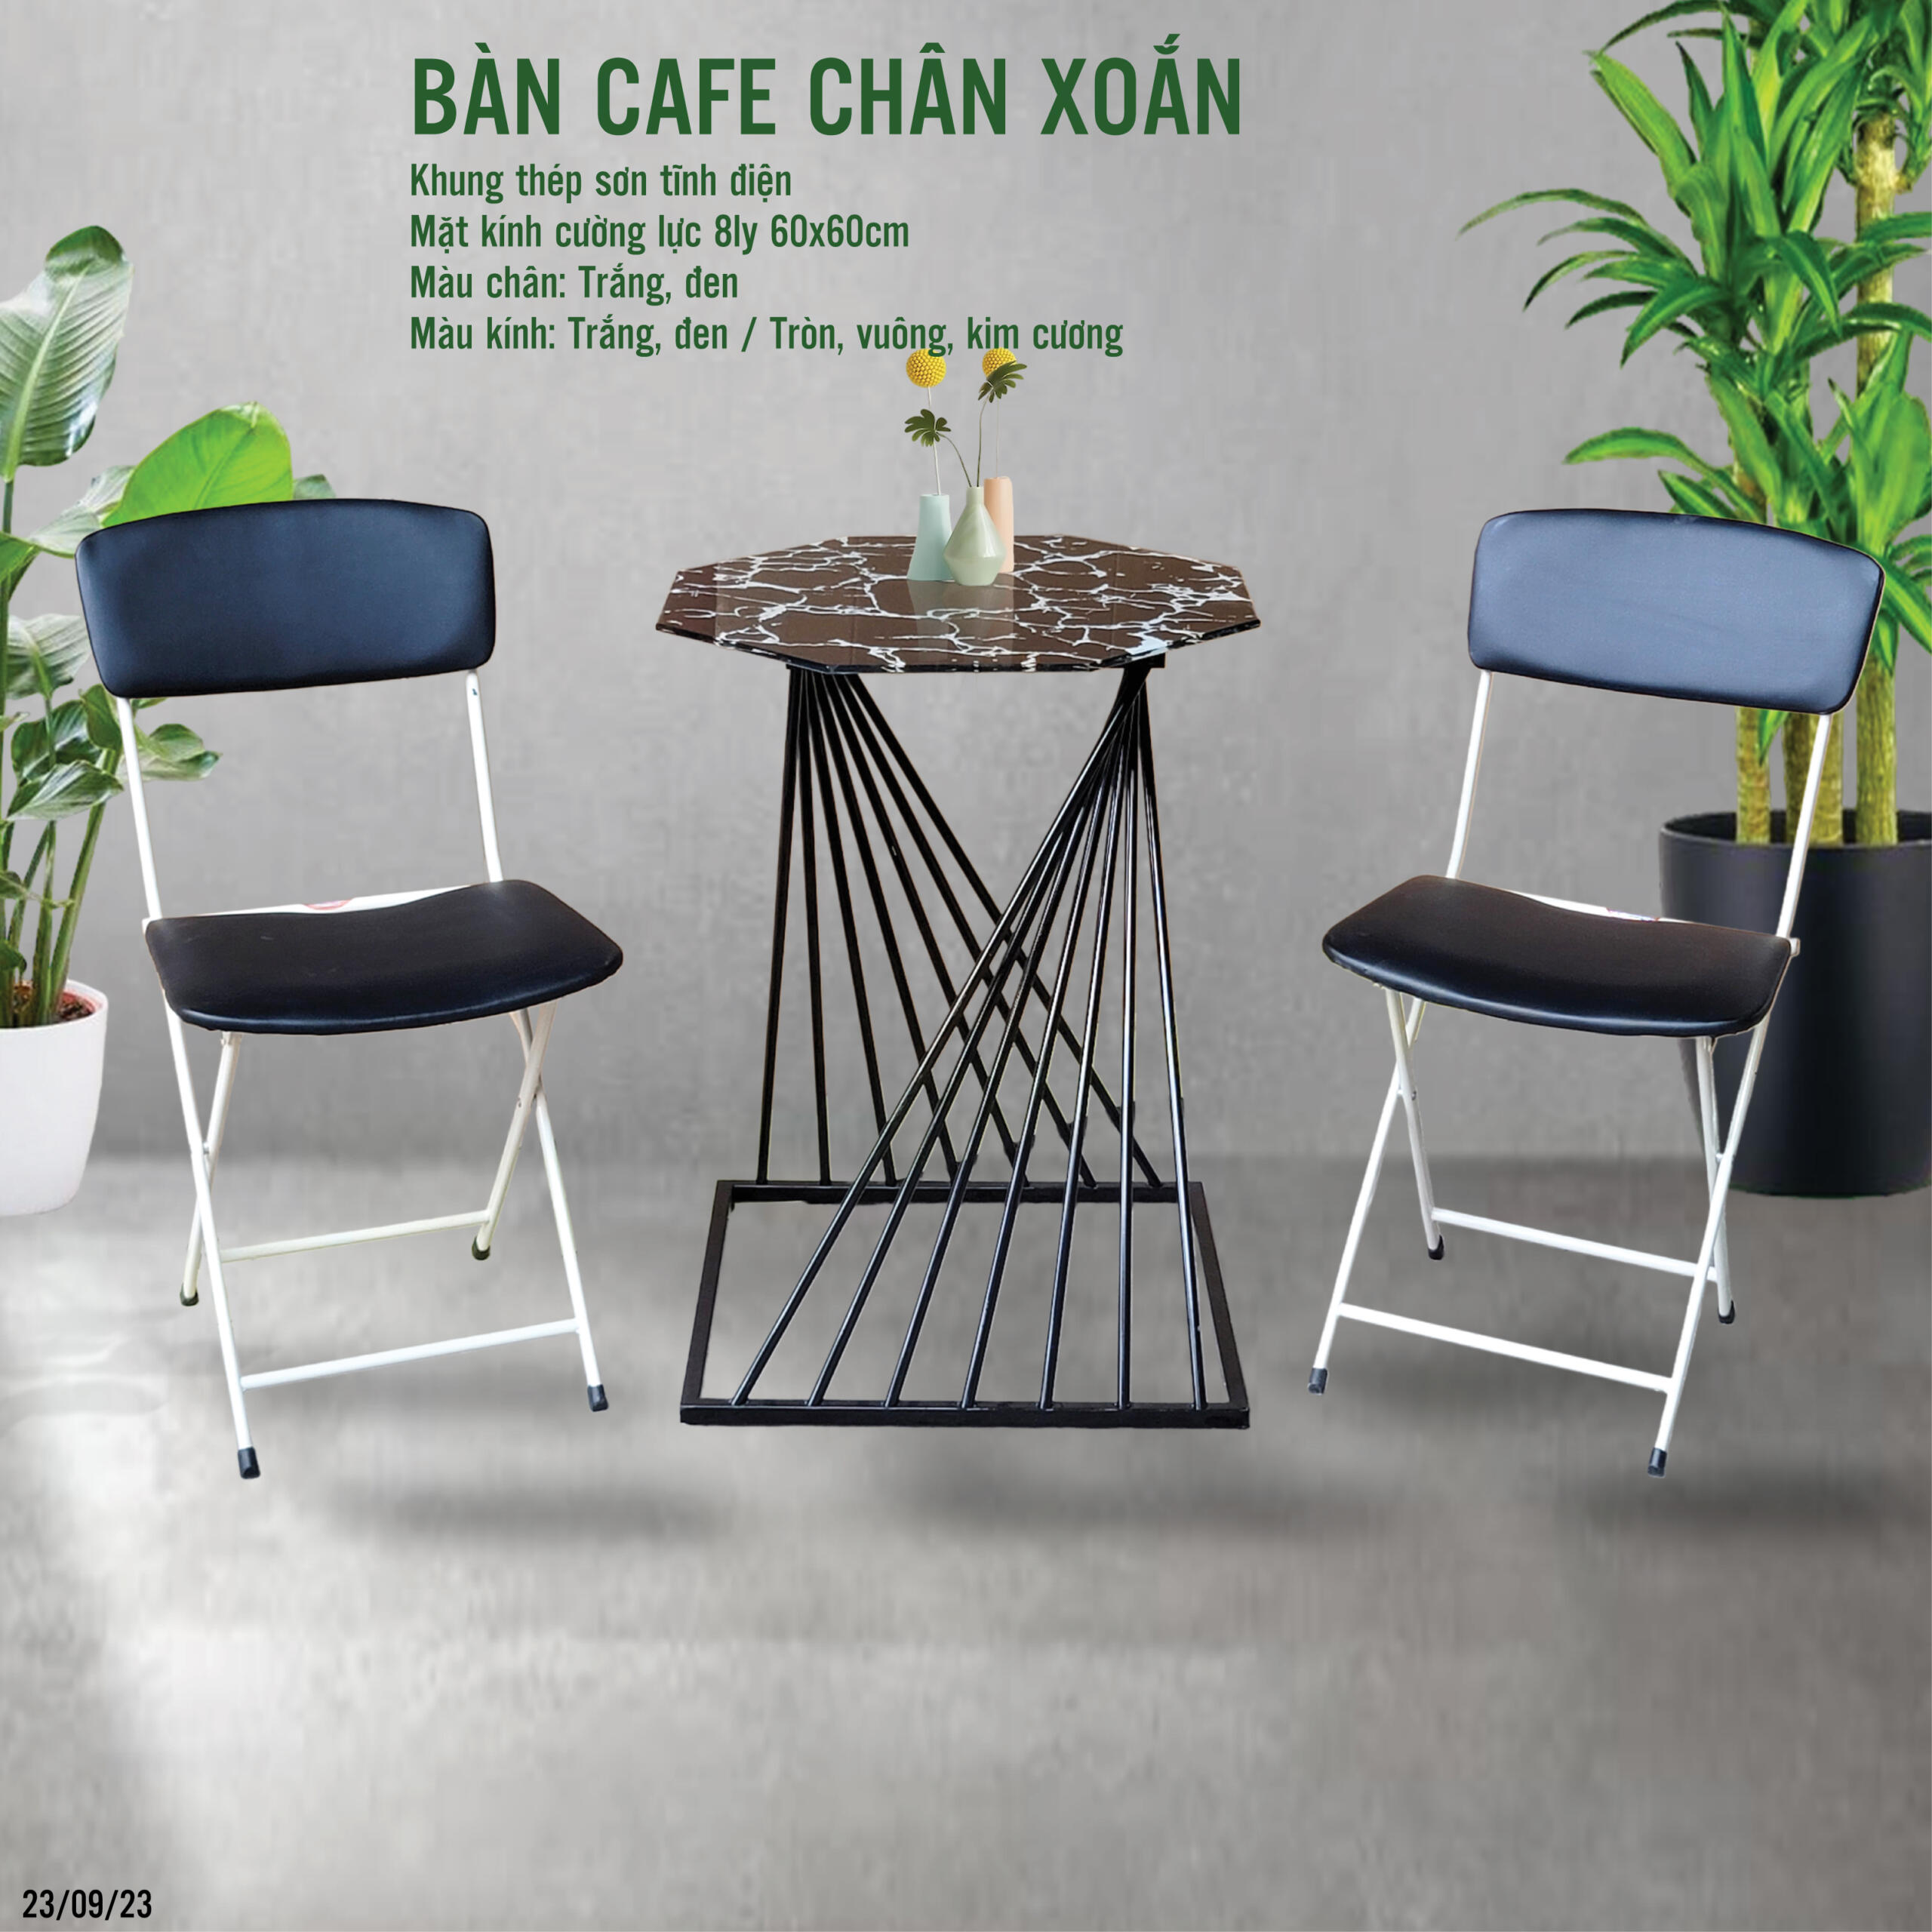 khong gia - ban cafe (1)